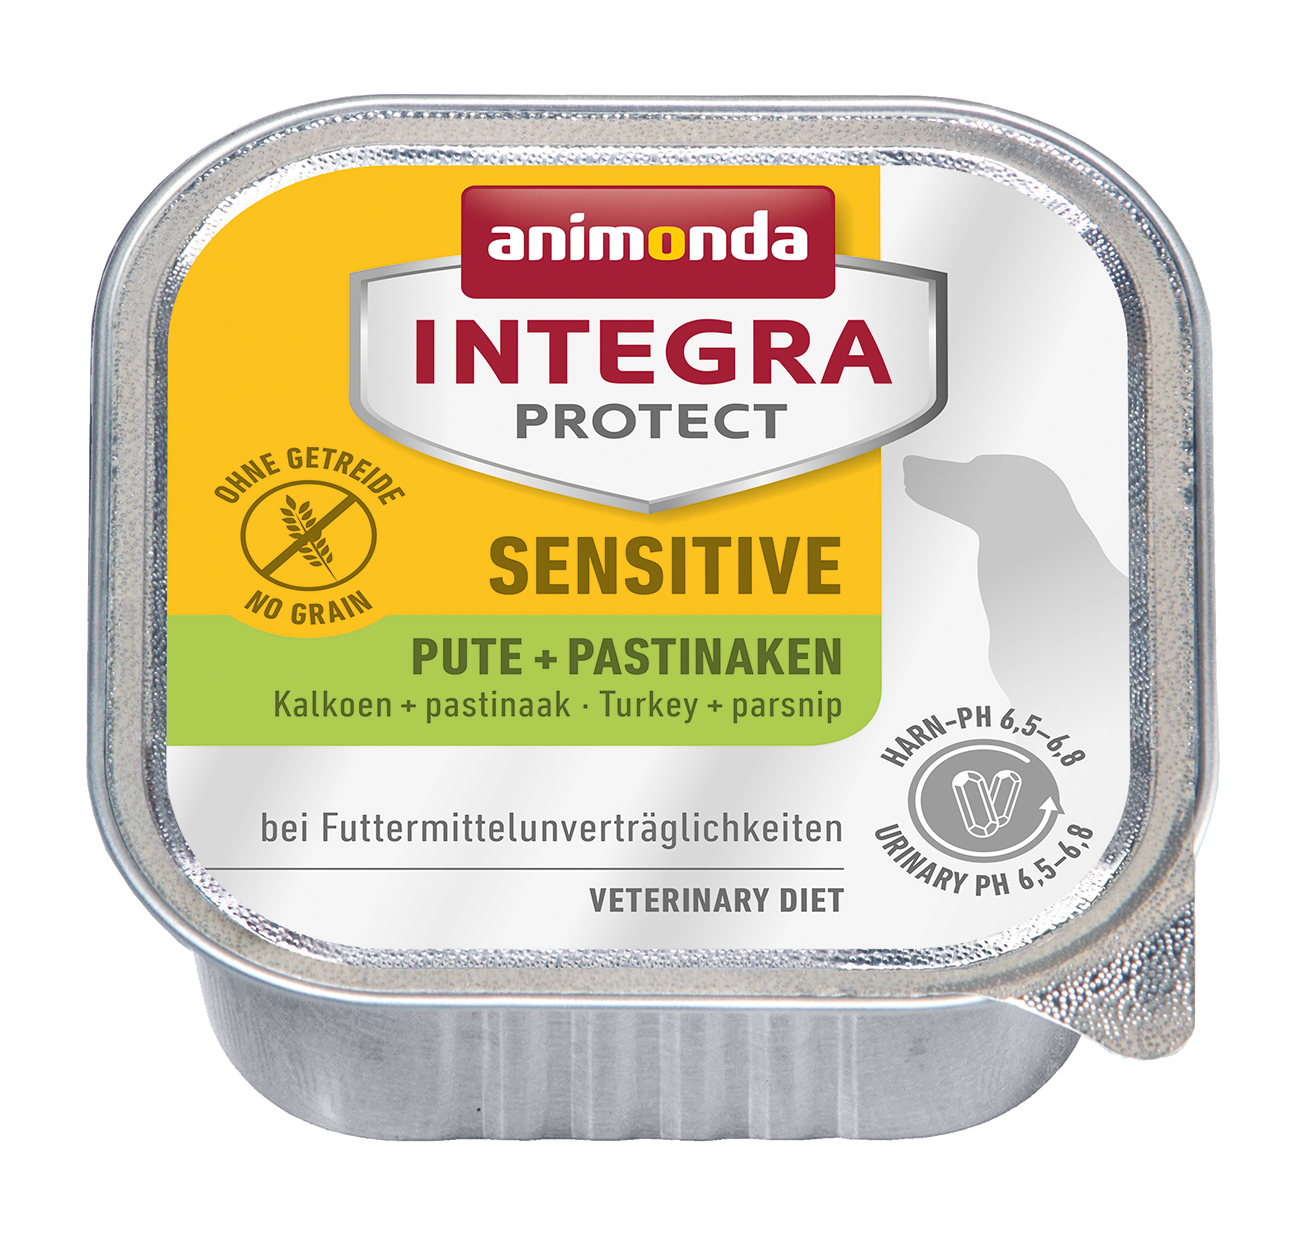 Animonda Dog Schale Integra Protect Sensitiv Pute 150g